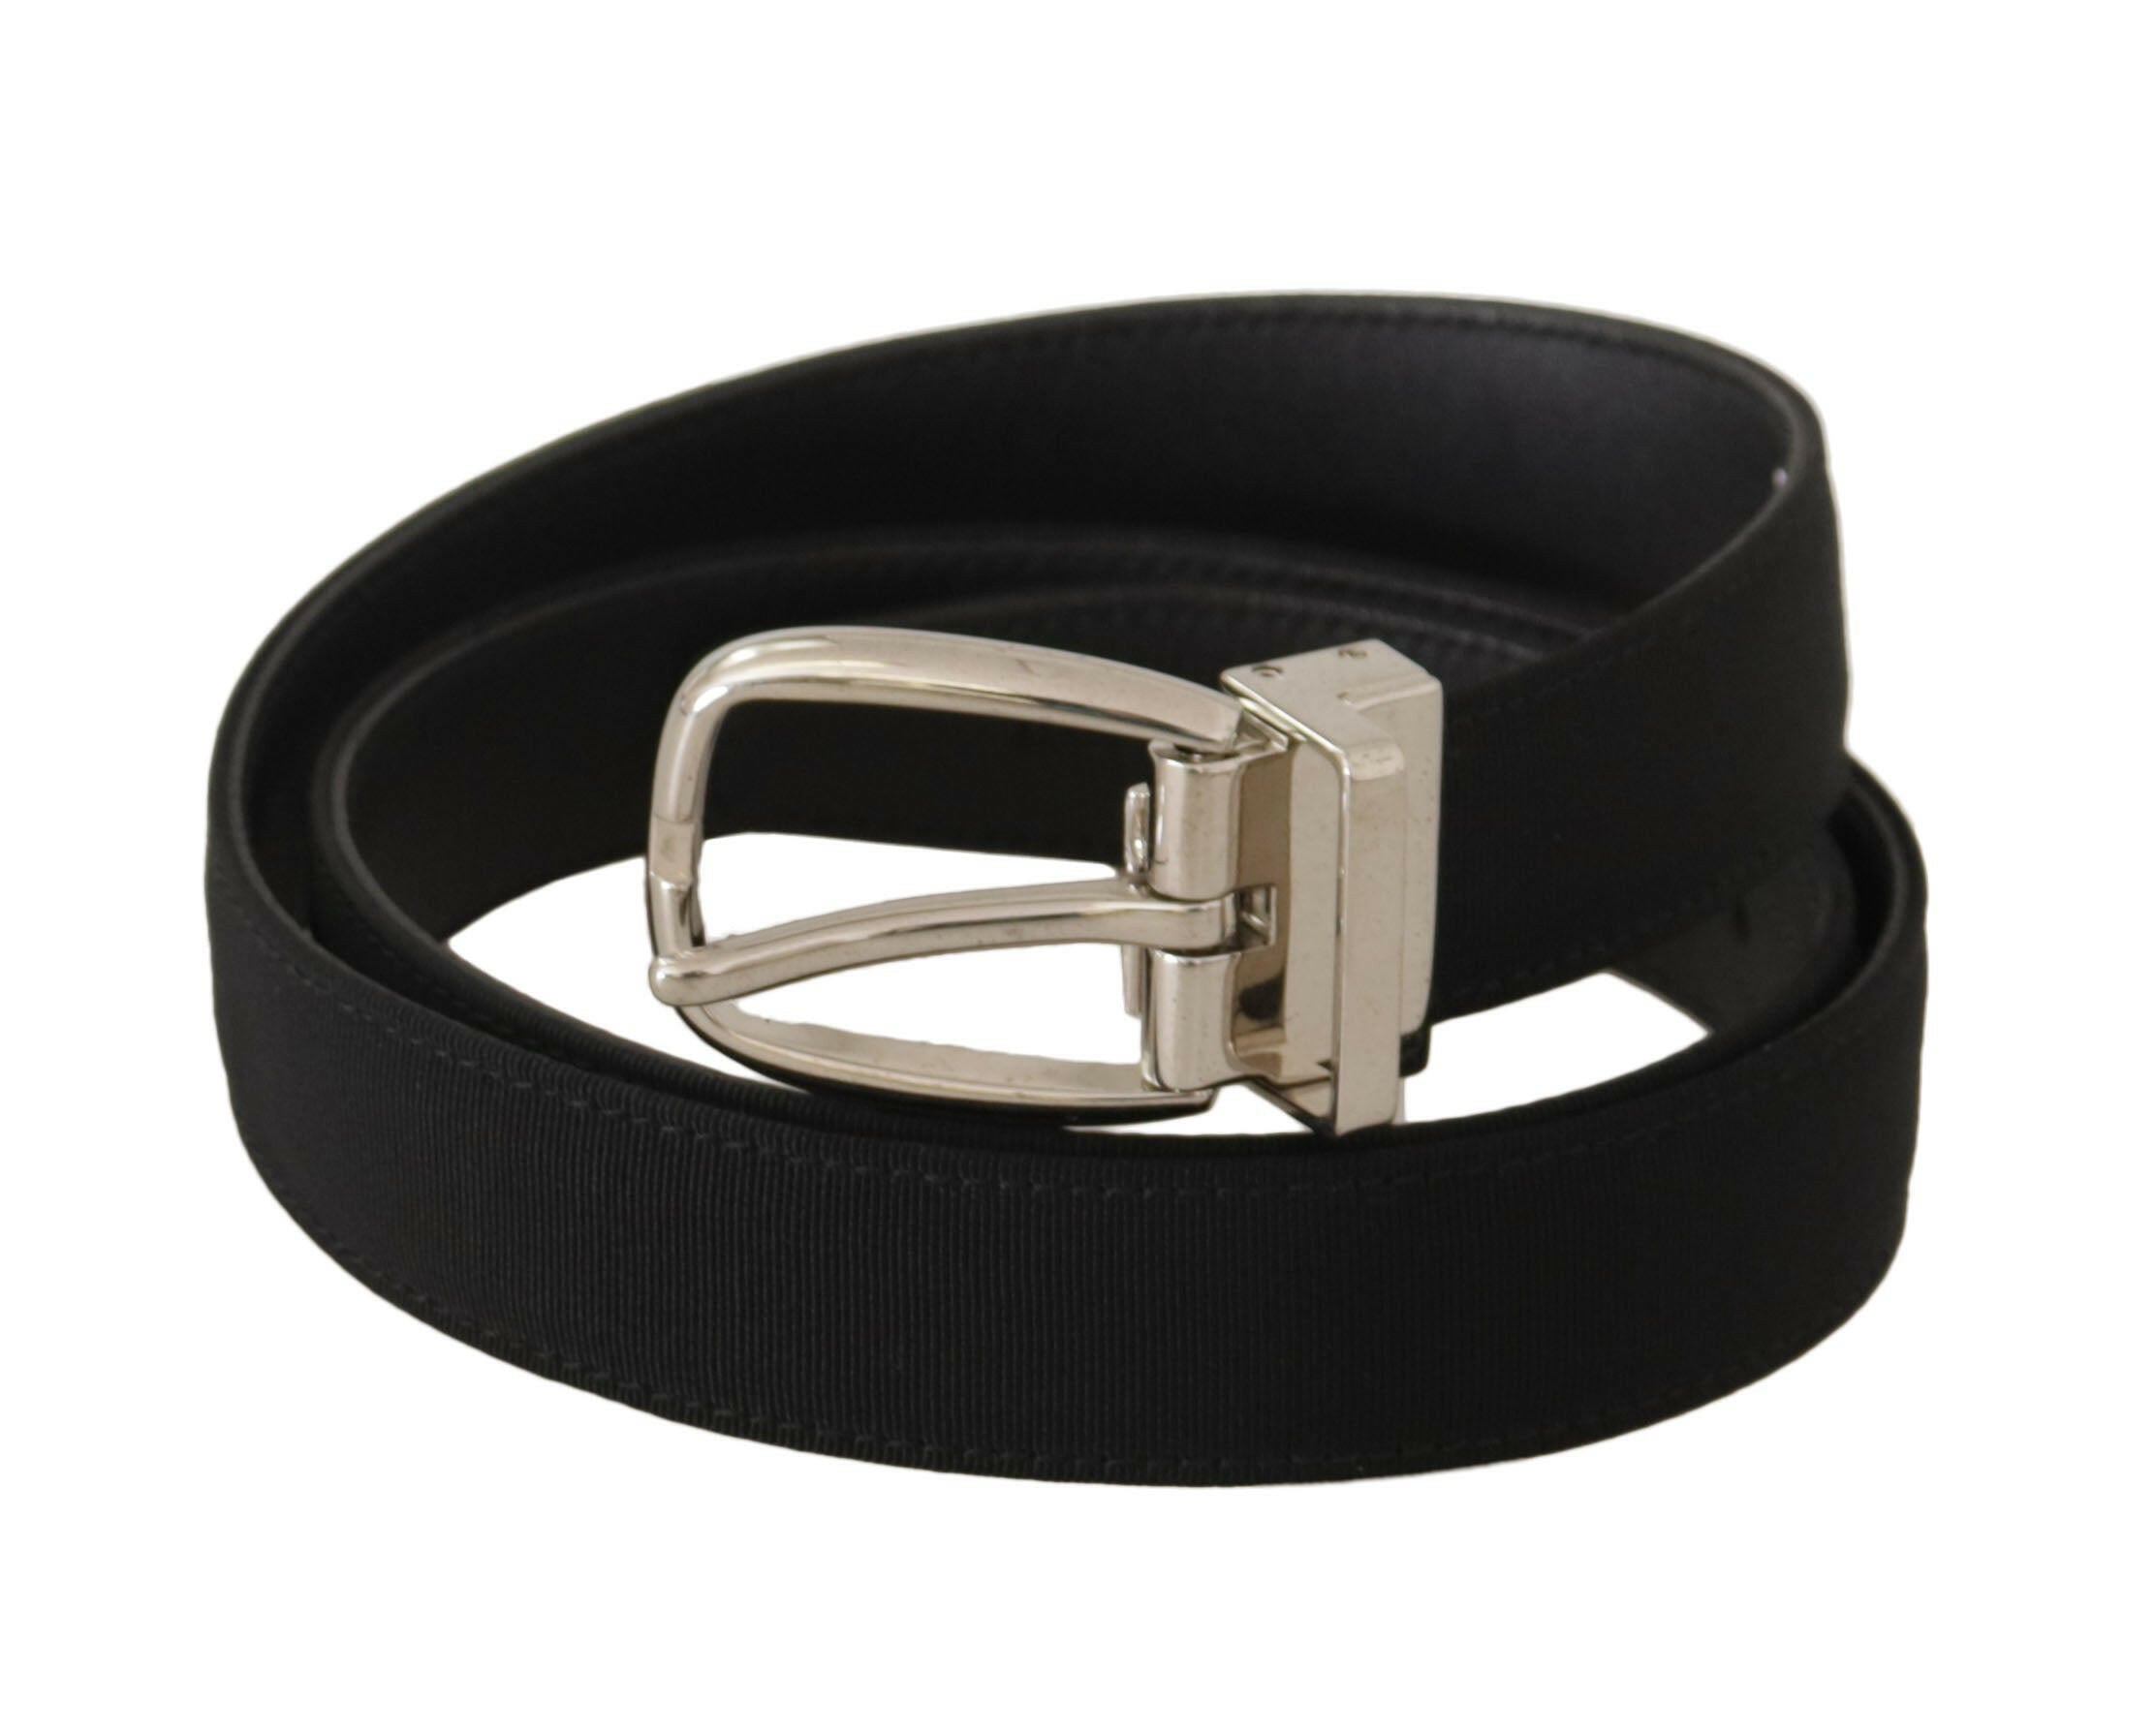 Dolce & Gabbana Belt Black Calf Leather Silver Tone Metal Buckle - GENUINE AUTHENTIC BRAND LLC  